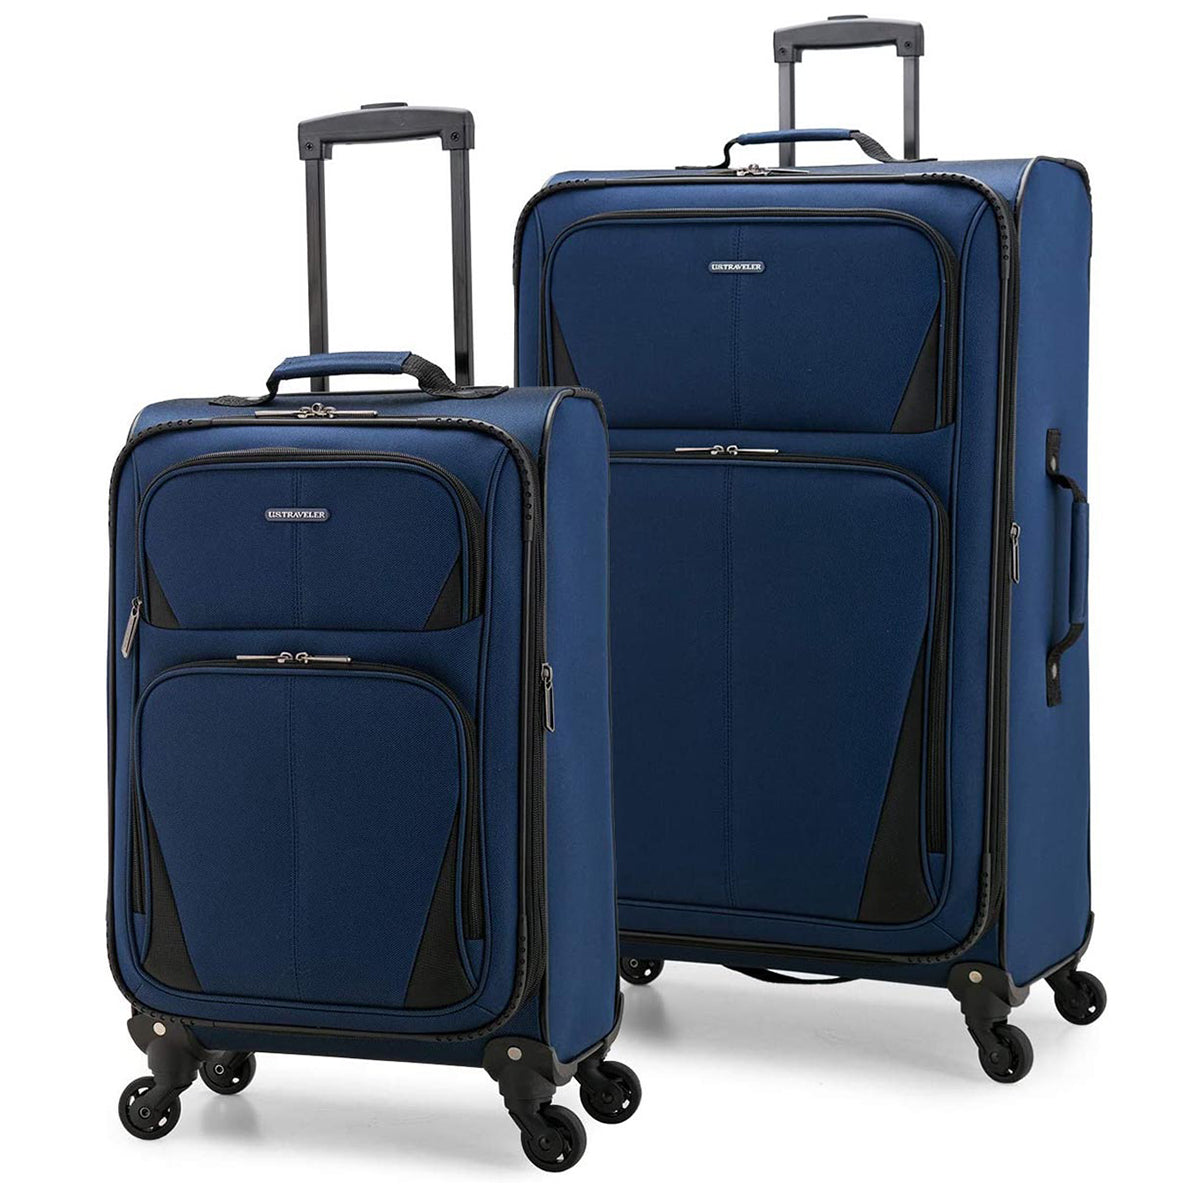 U.S. Traveler Aviron Bay Expandable Softside Luggage with Spinner Wheels, 2 Piece